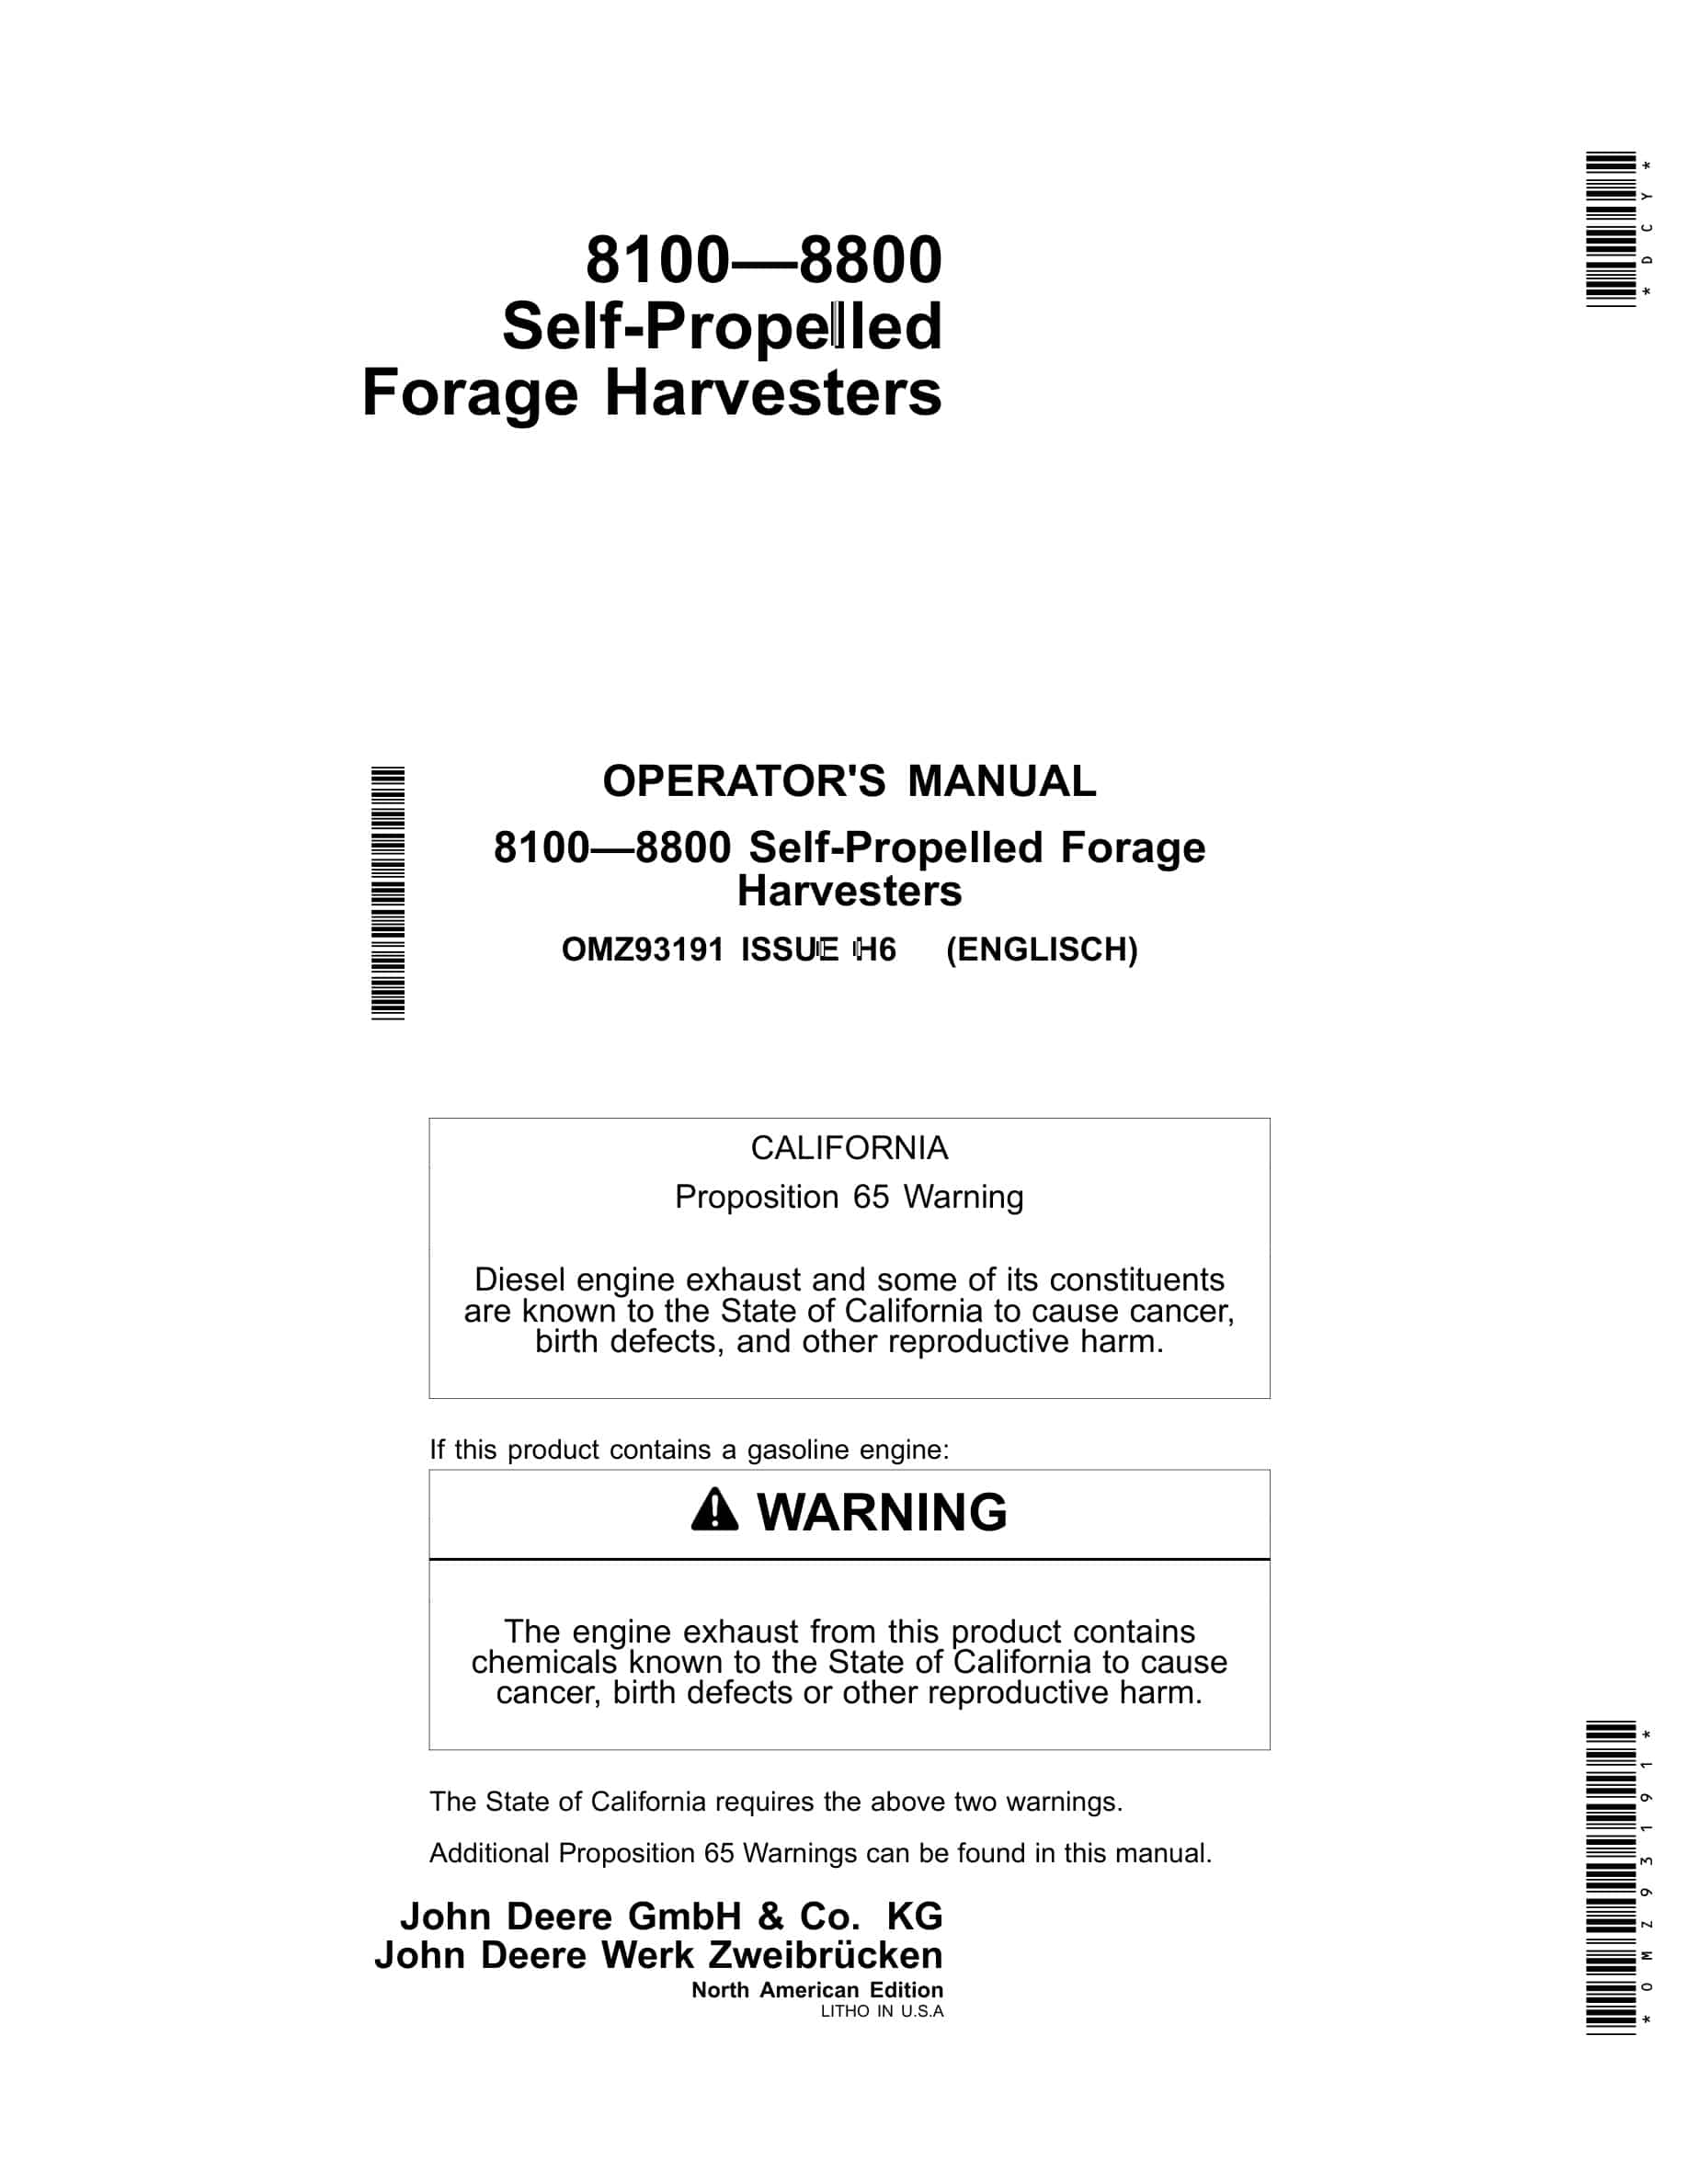 John Deere 8100 – 8800 Self-Propelled Forage Harvester Operator Manual OMZ93191-1